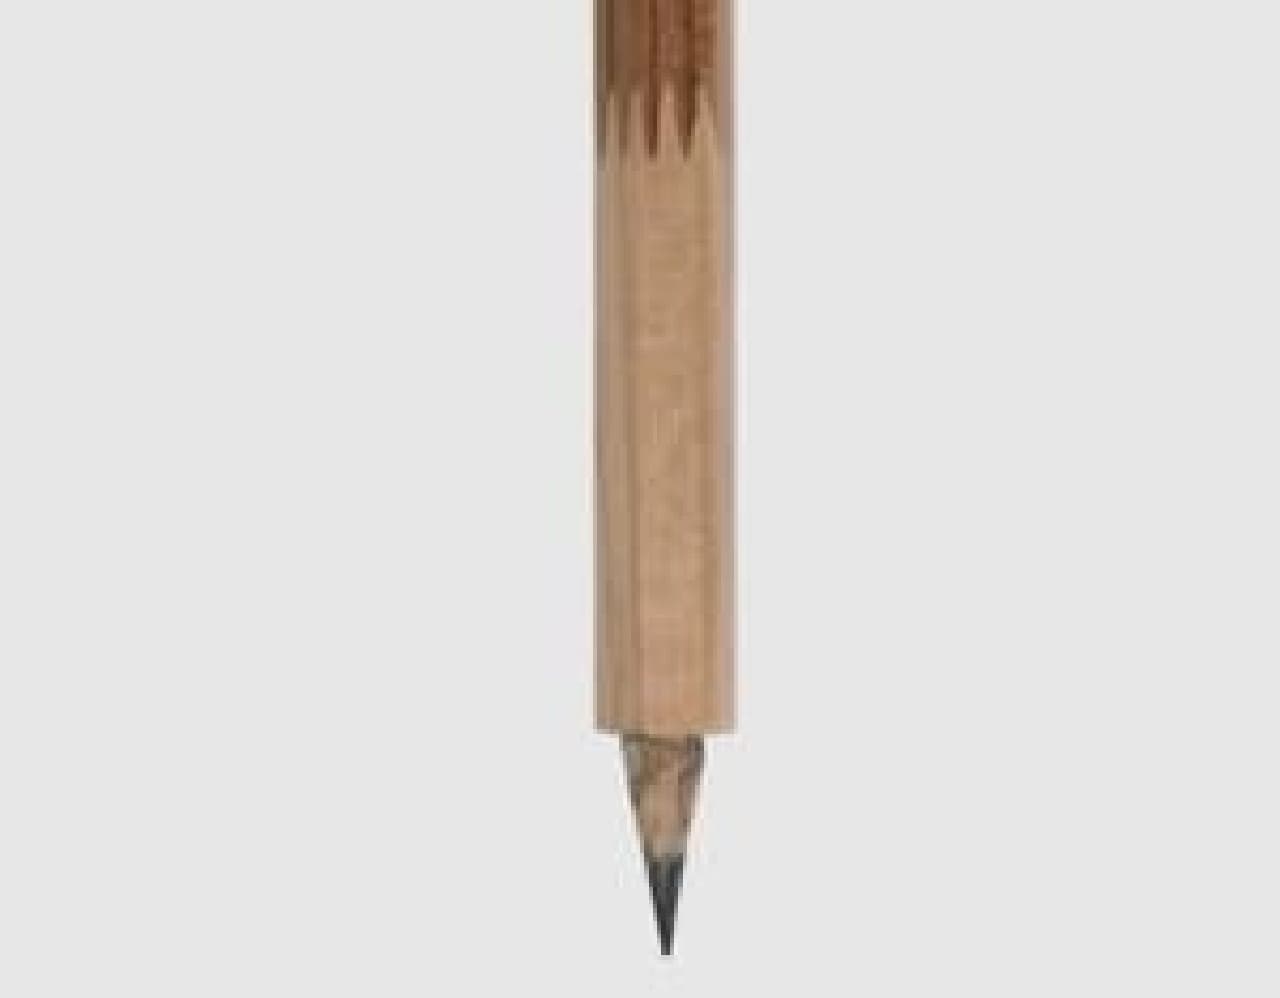 Make the pencil's head thinner,